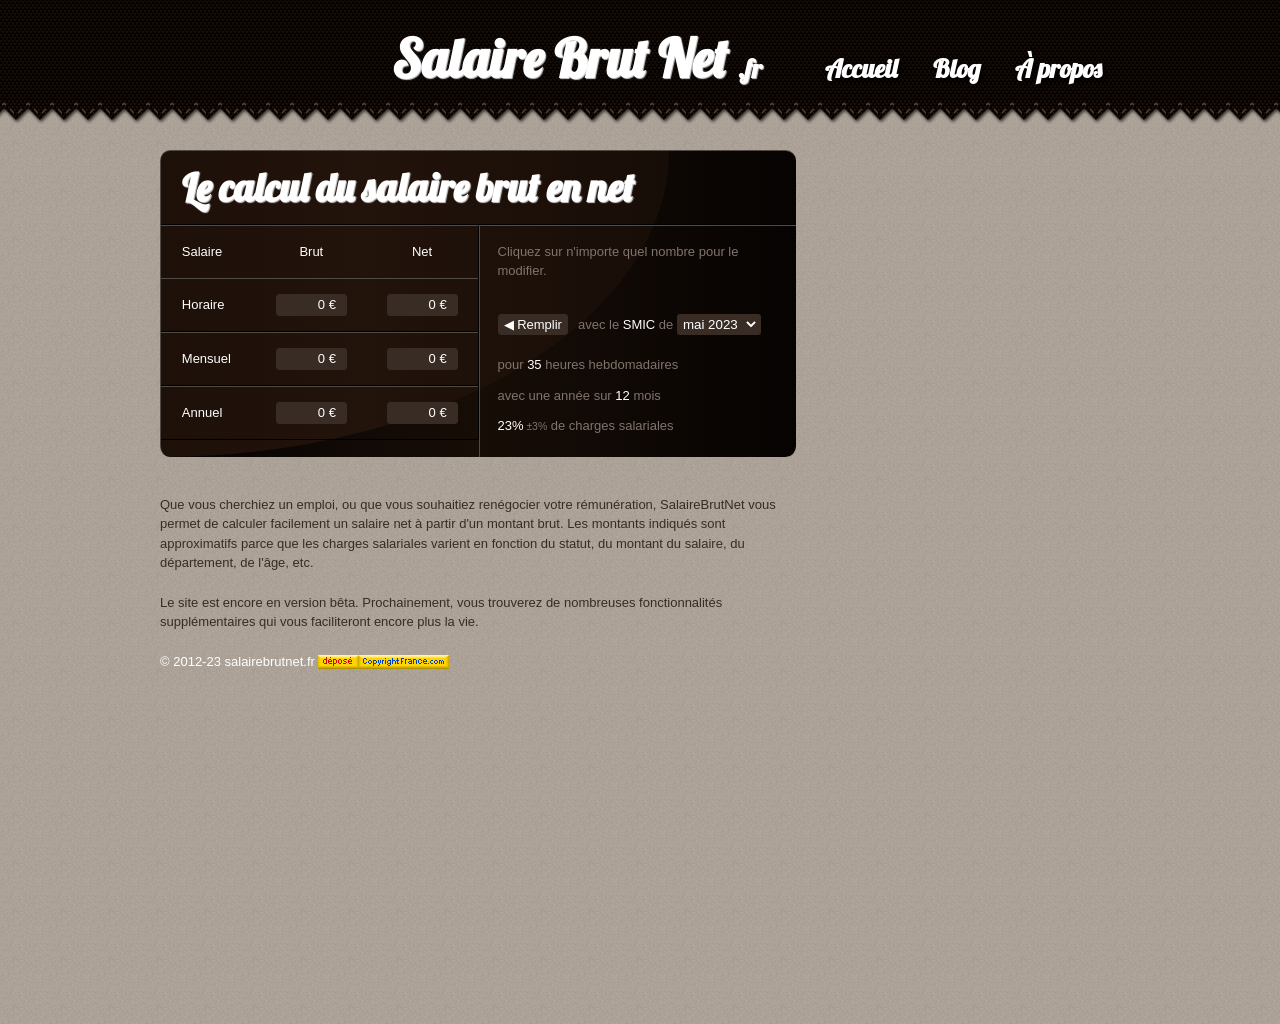 www.salairebrutnet.fr